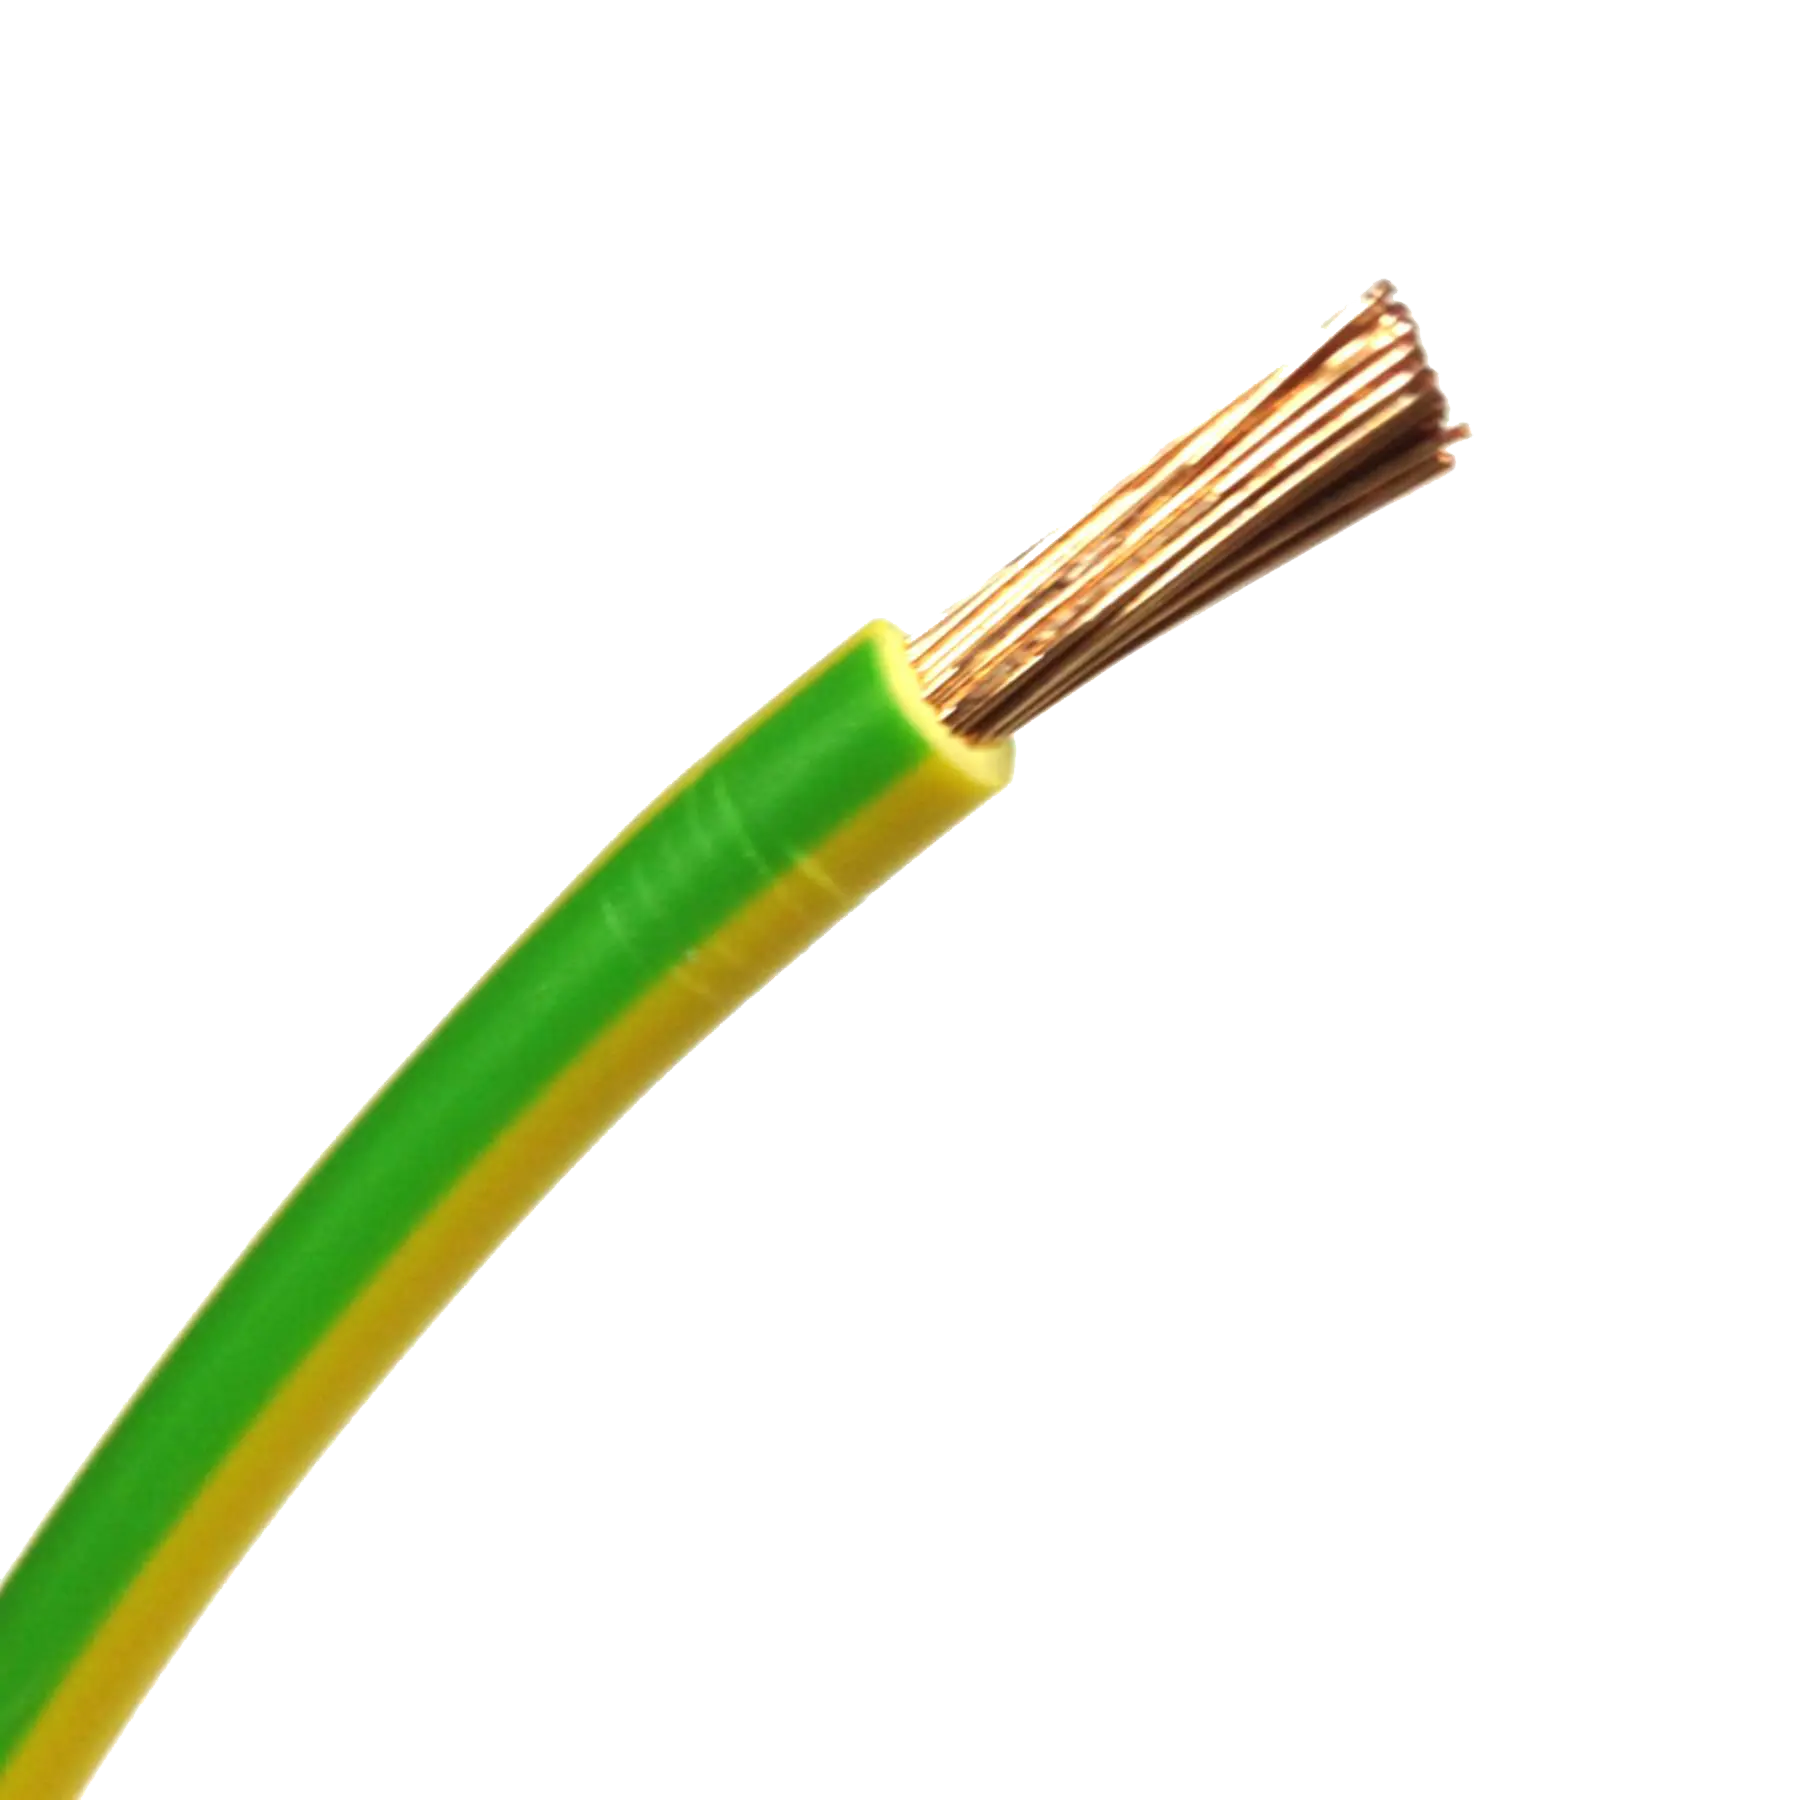 Kabel Bumi Isolasi PVC Tembaga Beruntai 7 Inti Tunggal 25mm2 Hijau dan Kuning AS/NZS5000.1